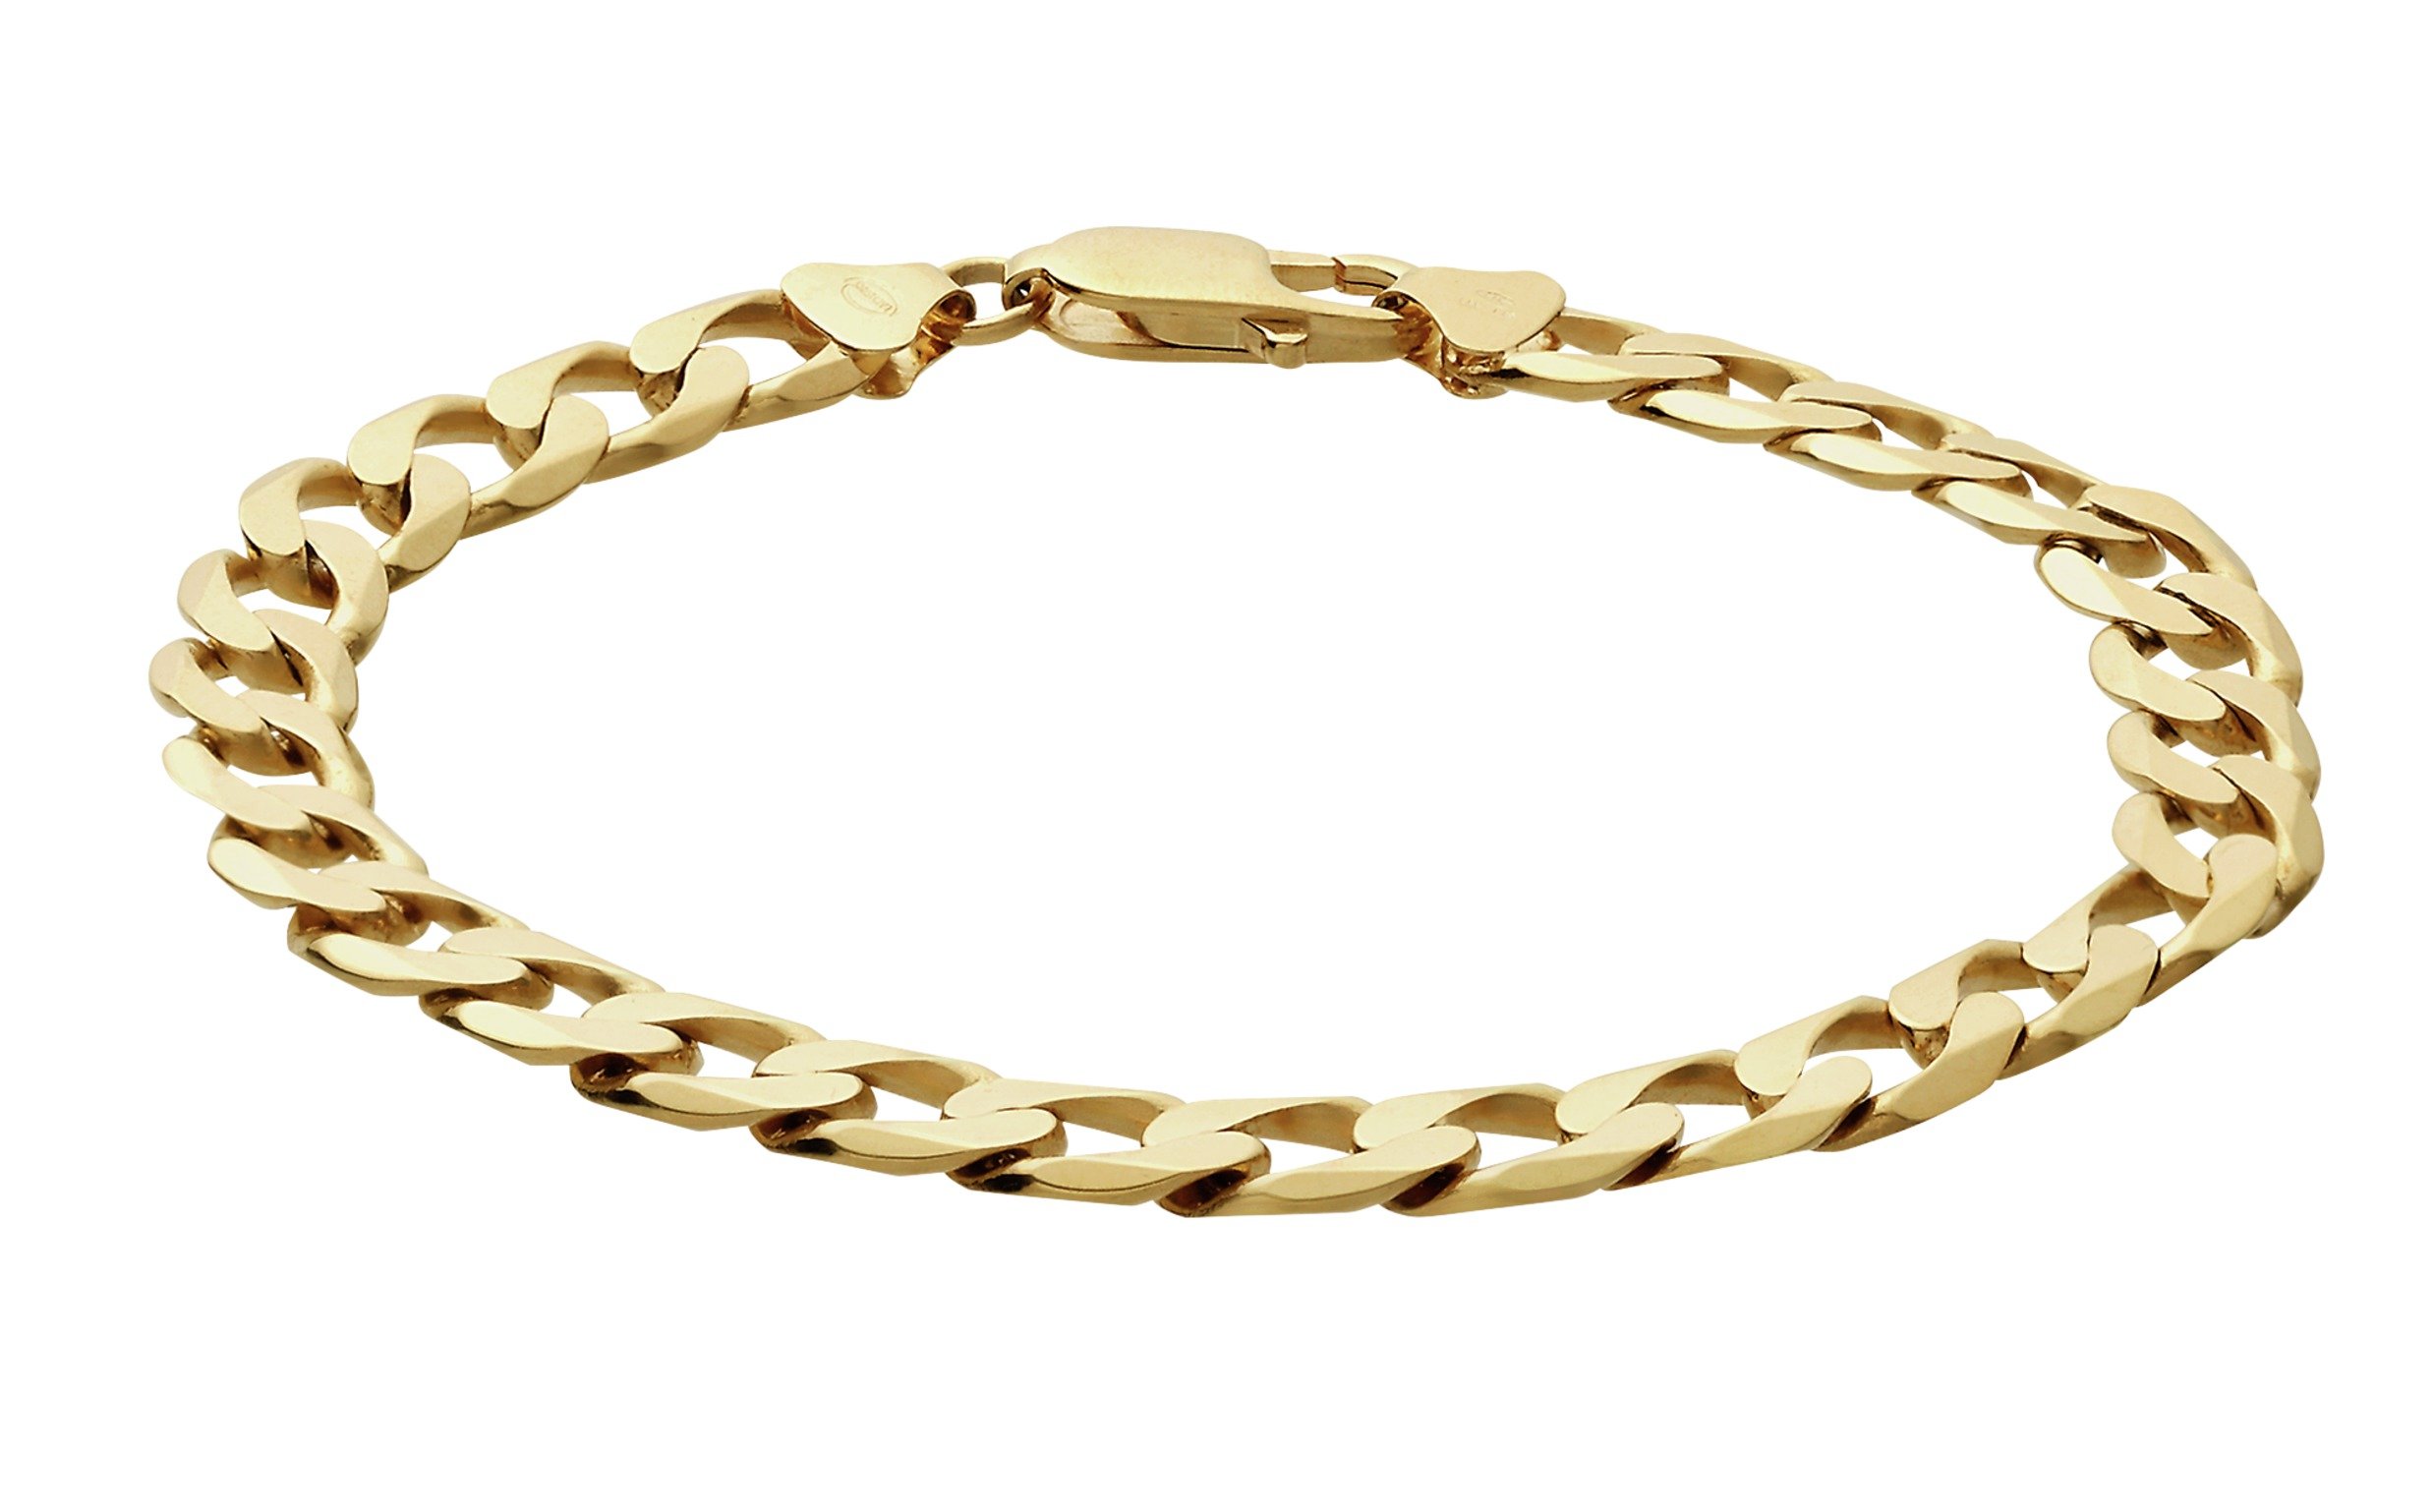 Revere 9ct Gold Solid Curb Bracelet